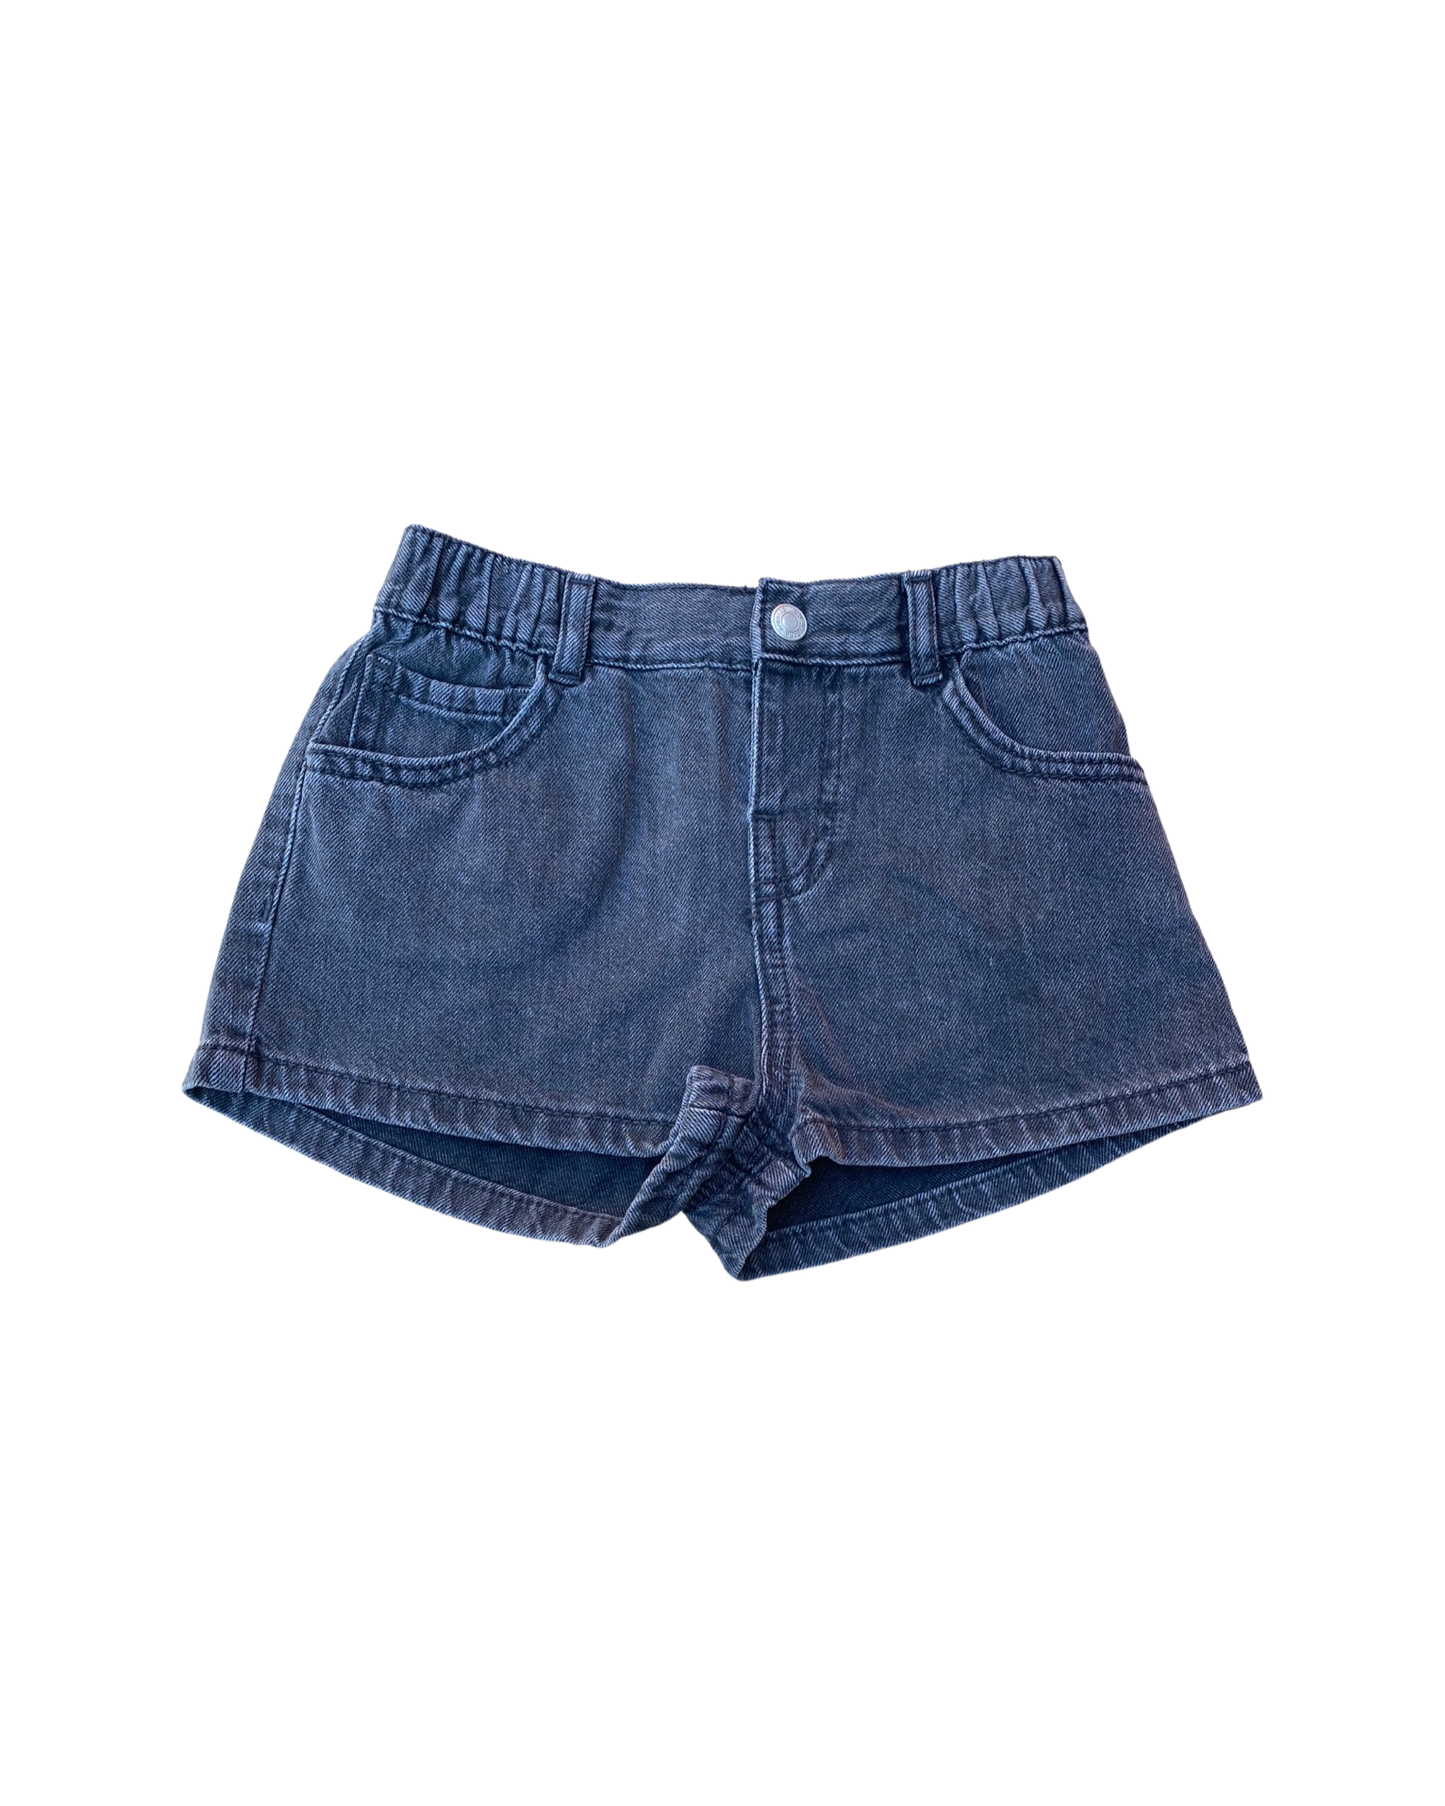 Baby Zara faded black denim shorts (4-5yrs)